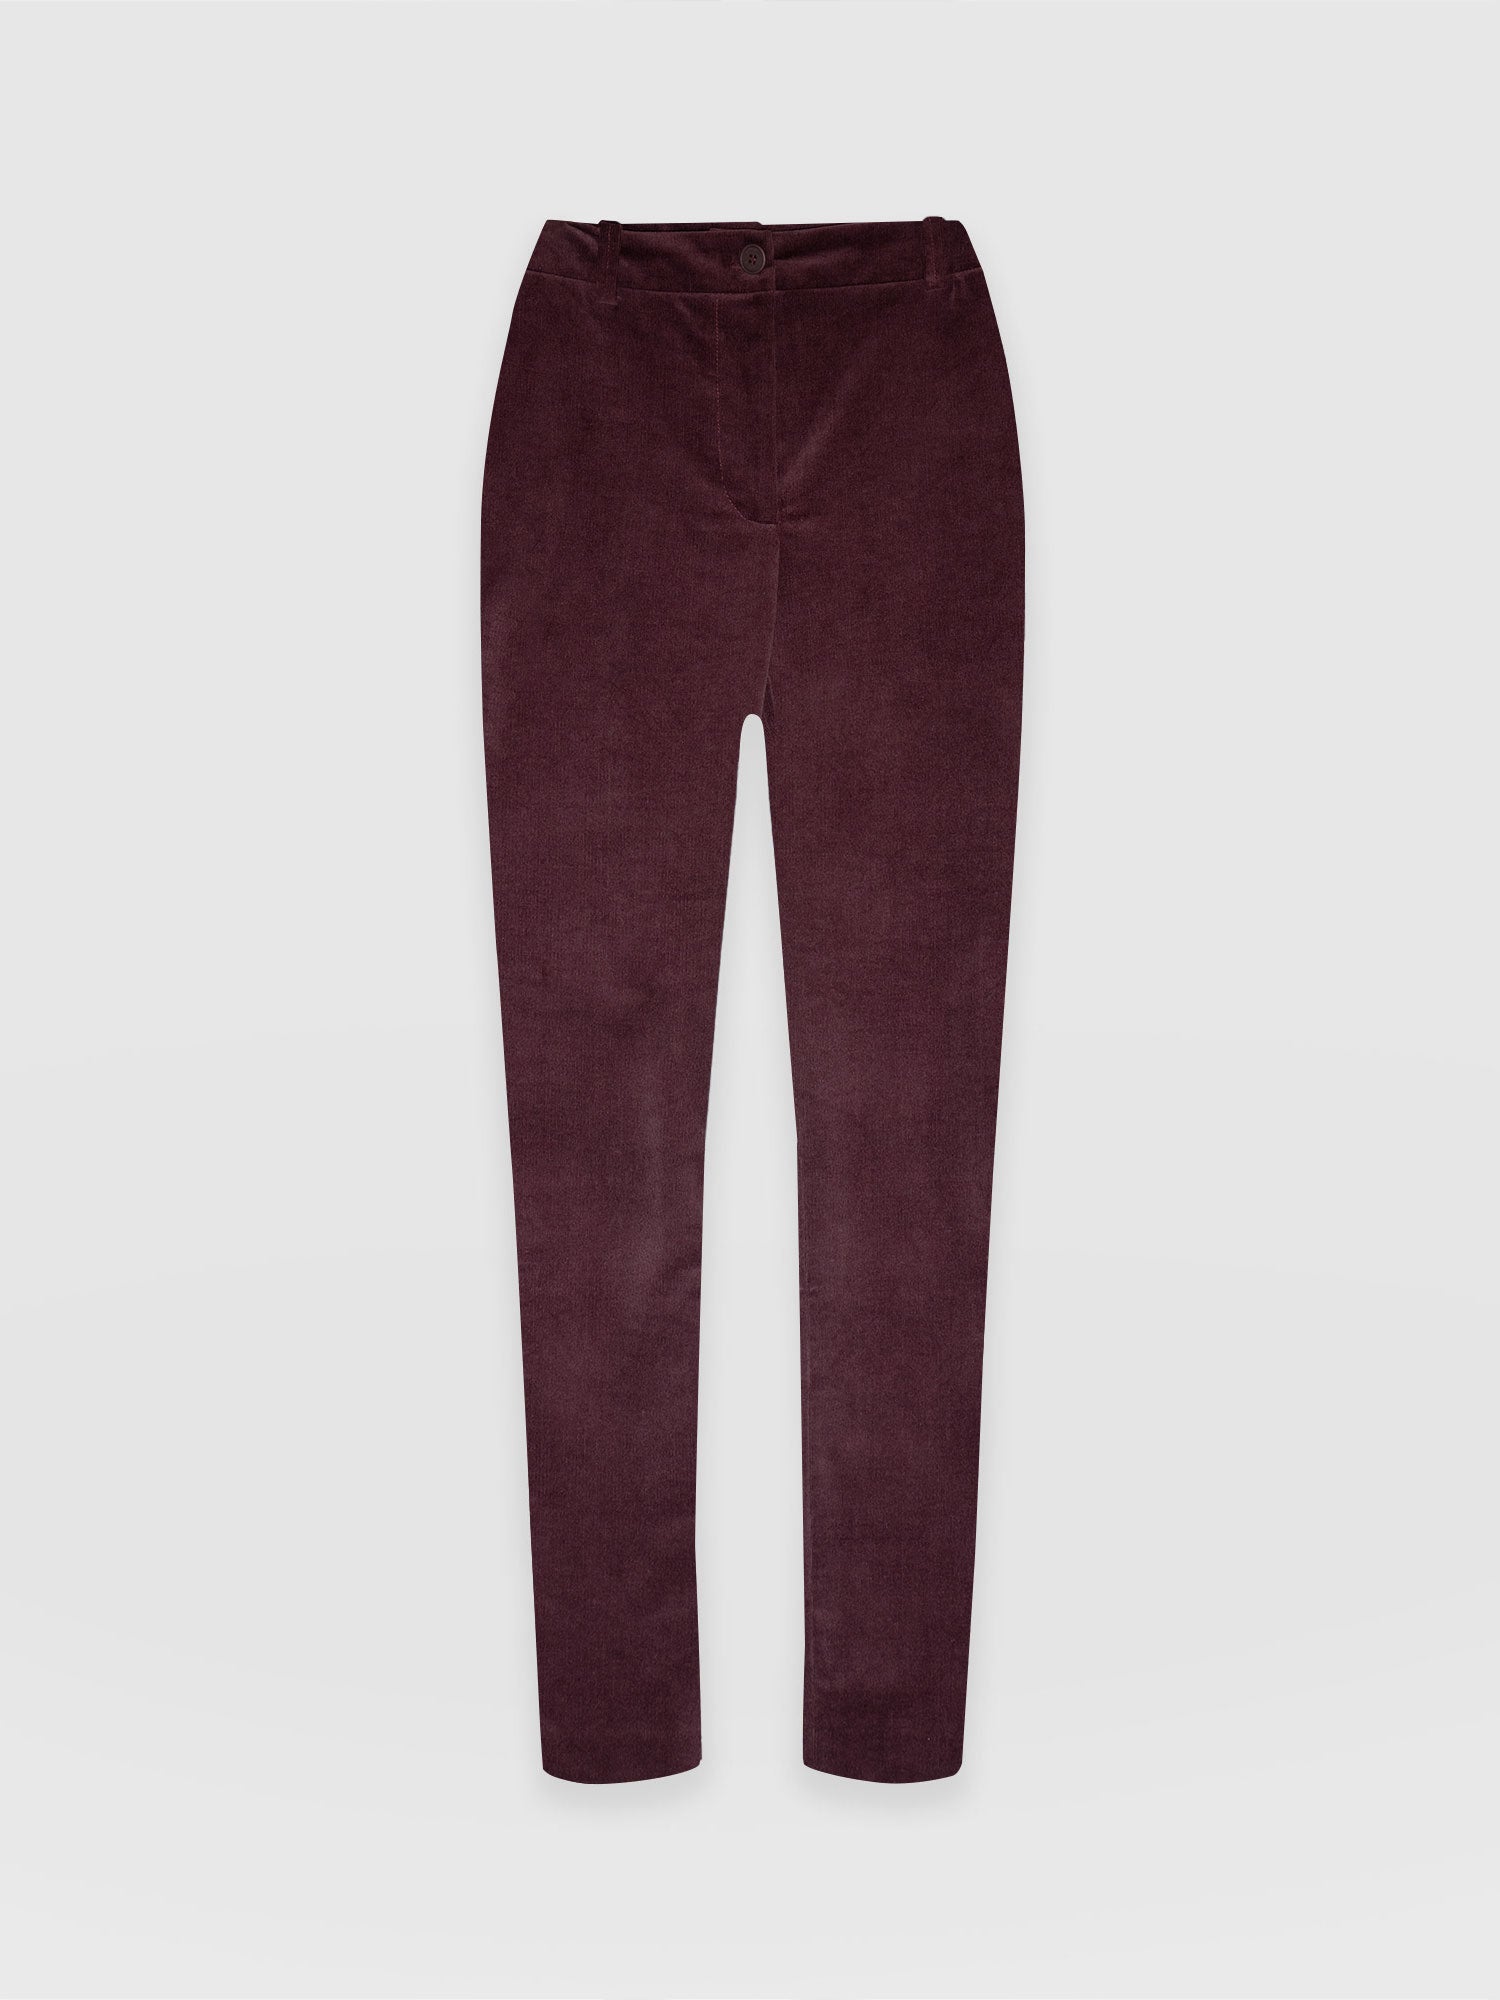 UK Women Faux Leather Pants Size 6-20 Elastic High Waist Pocket Trousers  Joggers | eBay